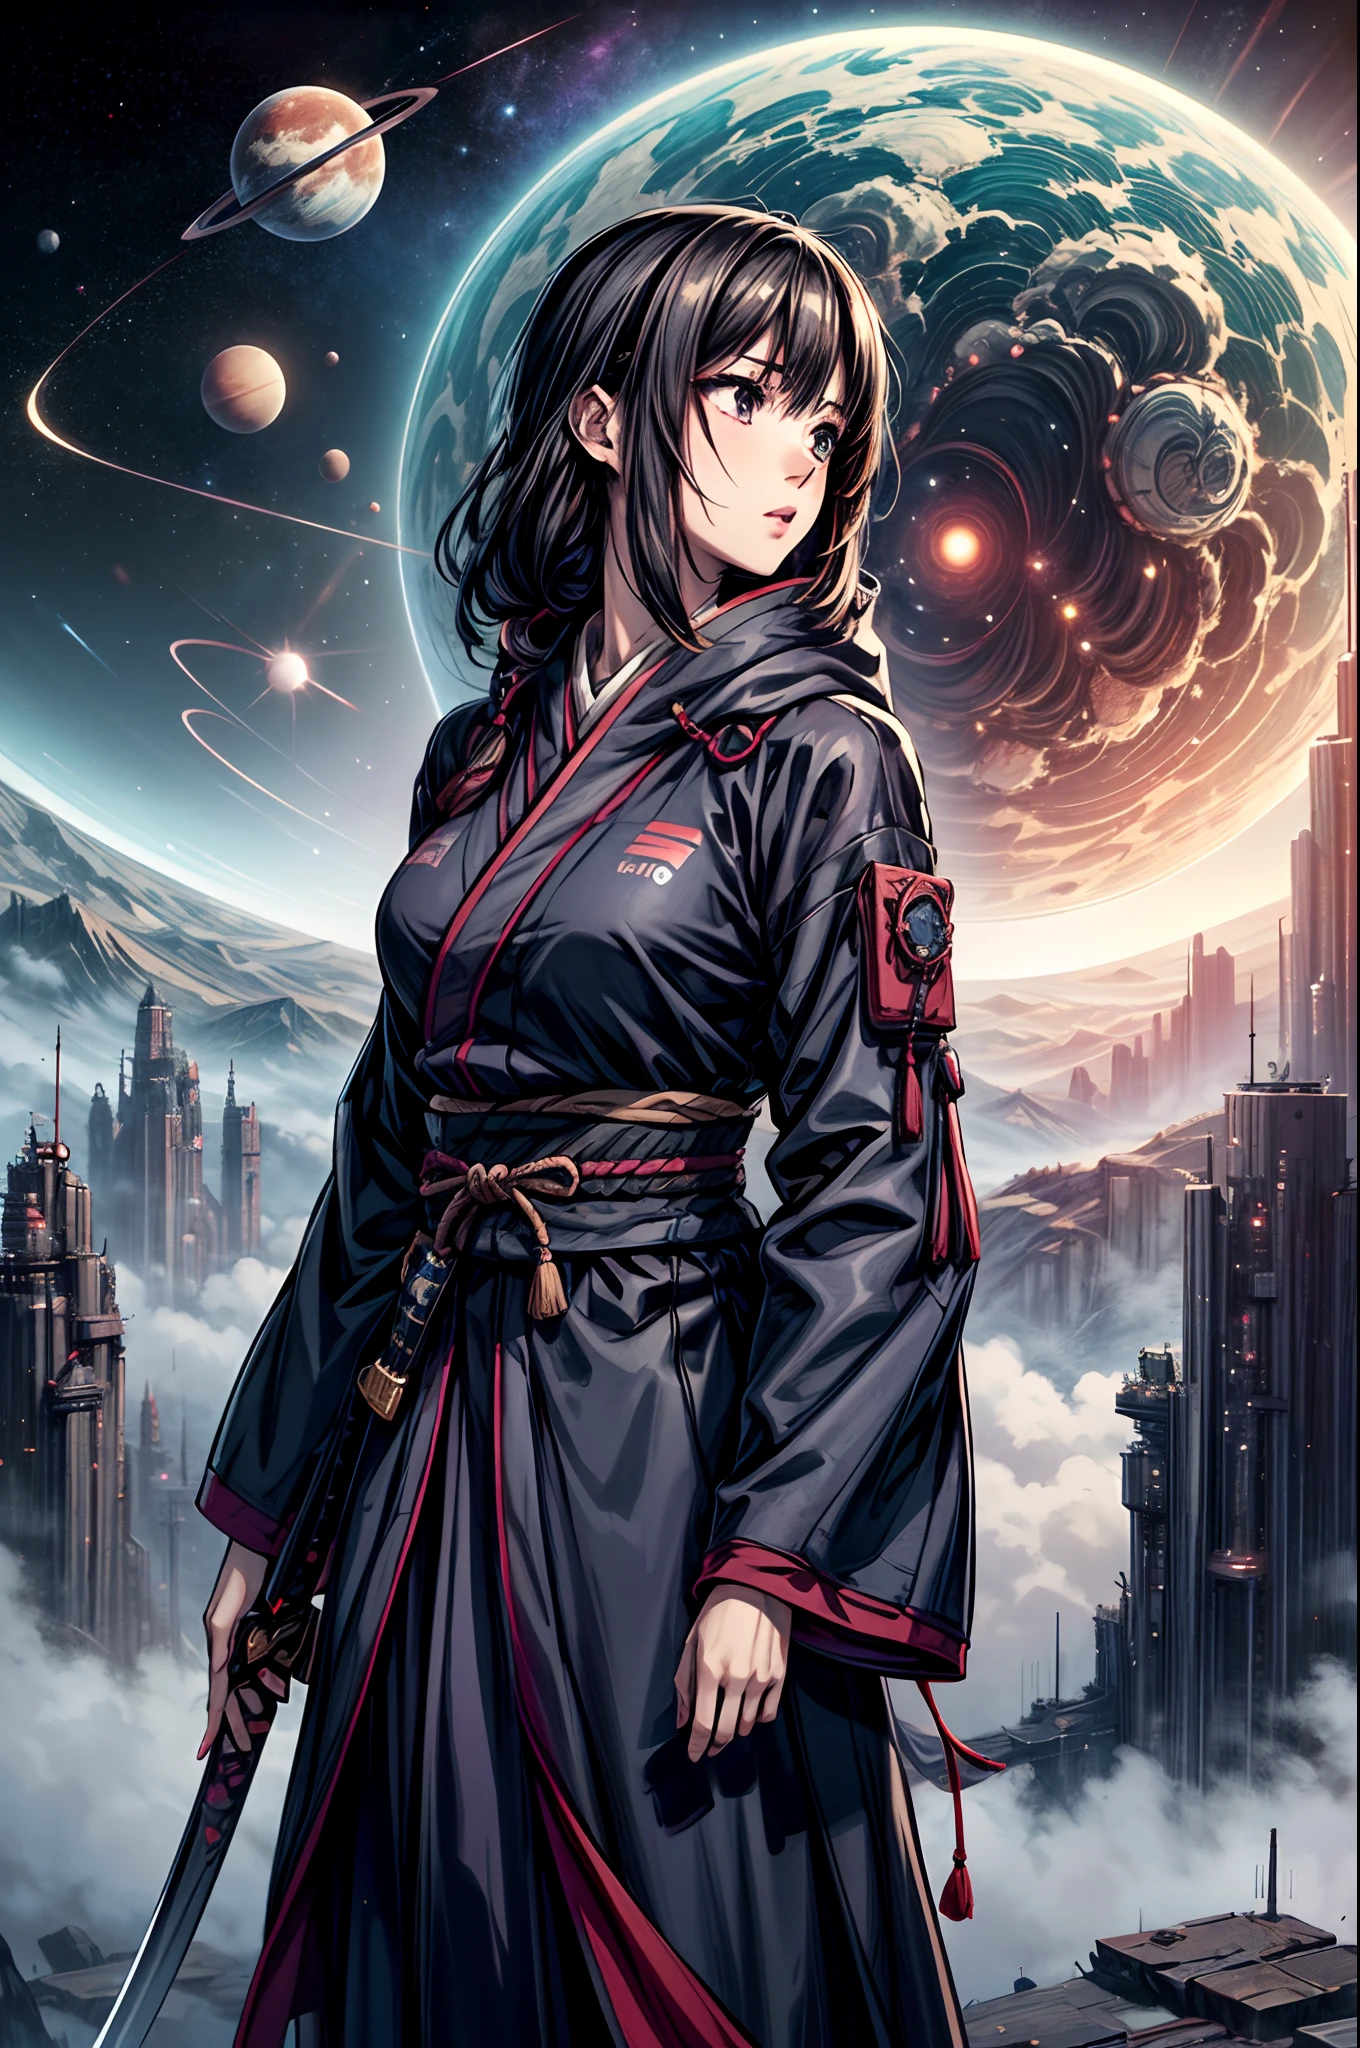 "Girl in sci-fi attire, masterful shinobi, cosmic katana, vast space, planetary wonders, (science fiction dreams), mist-shrouded landscape, captivating and surreal"